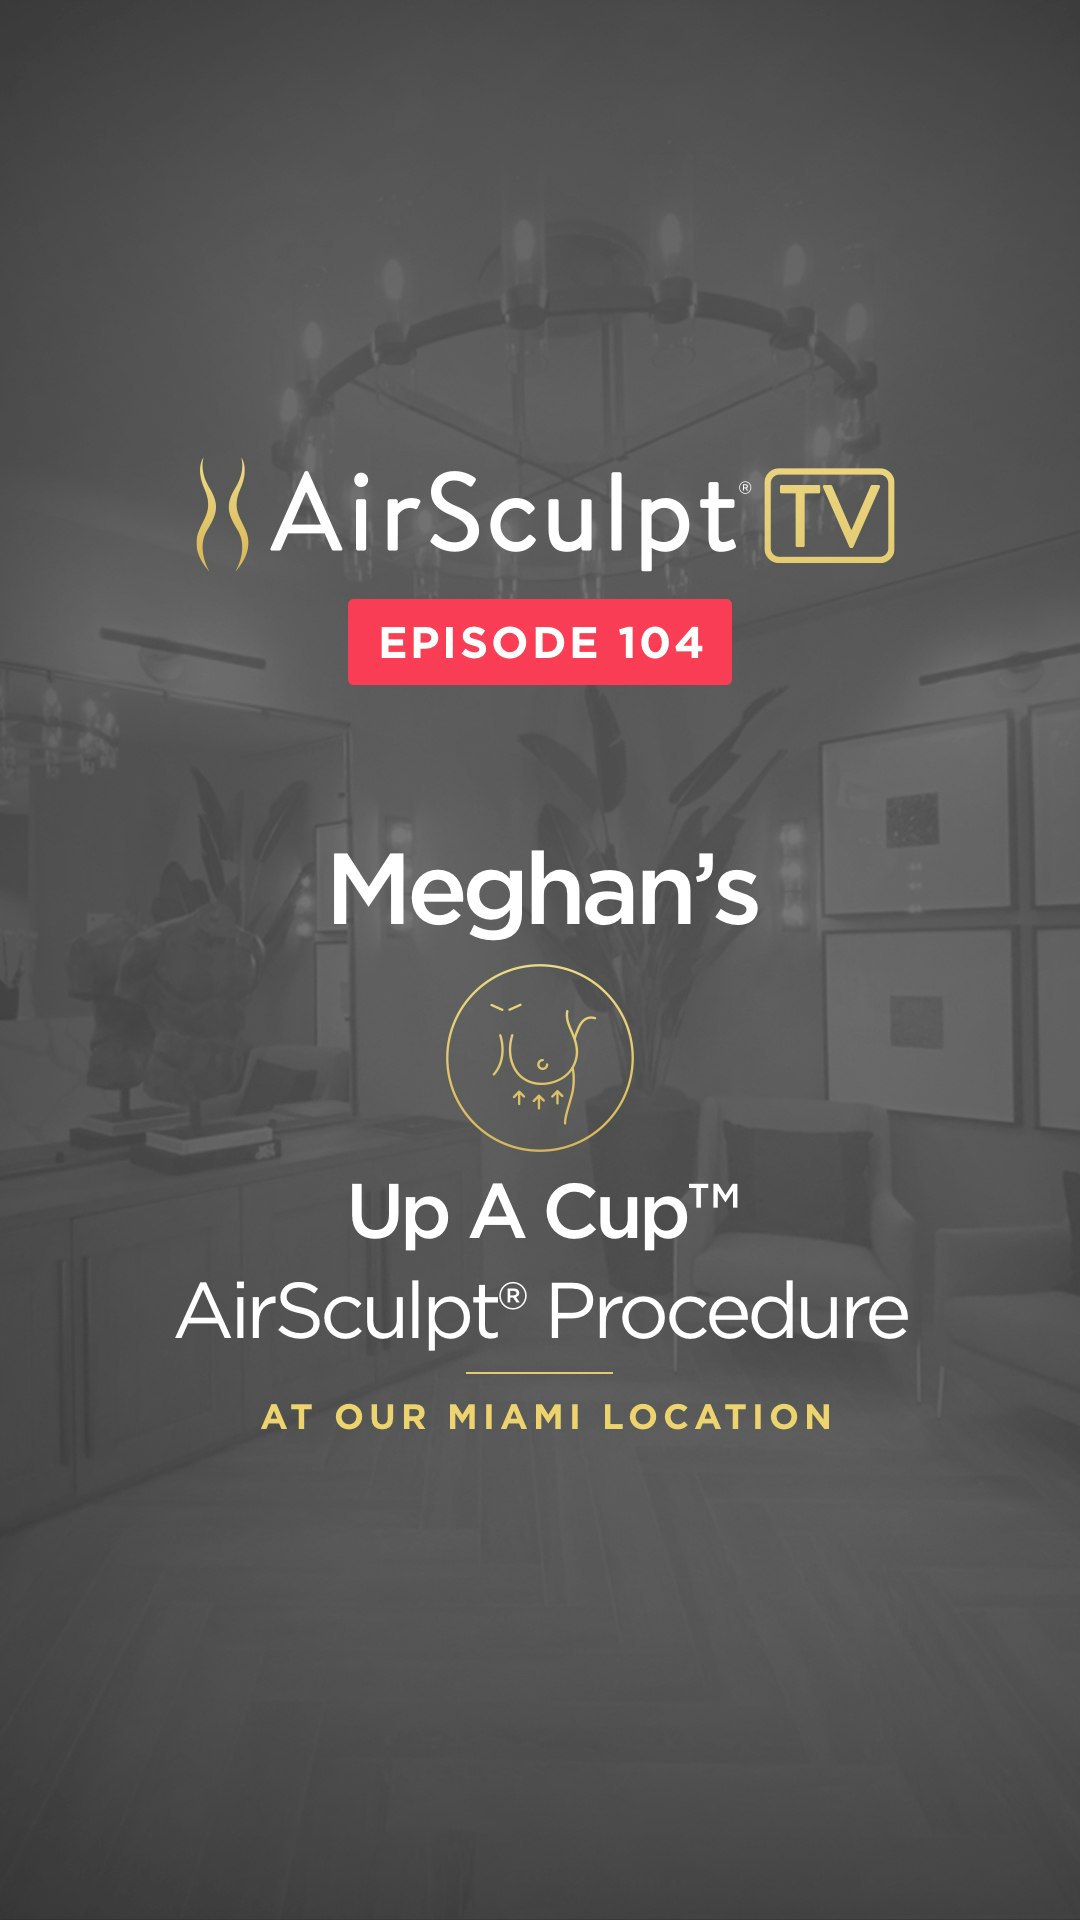 Meghan's airsculpt TV thumbnail